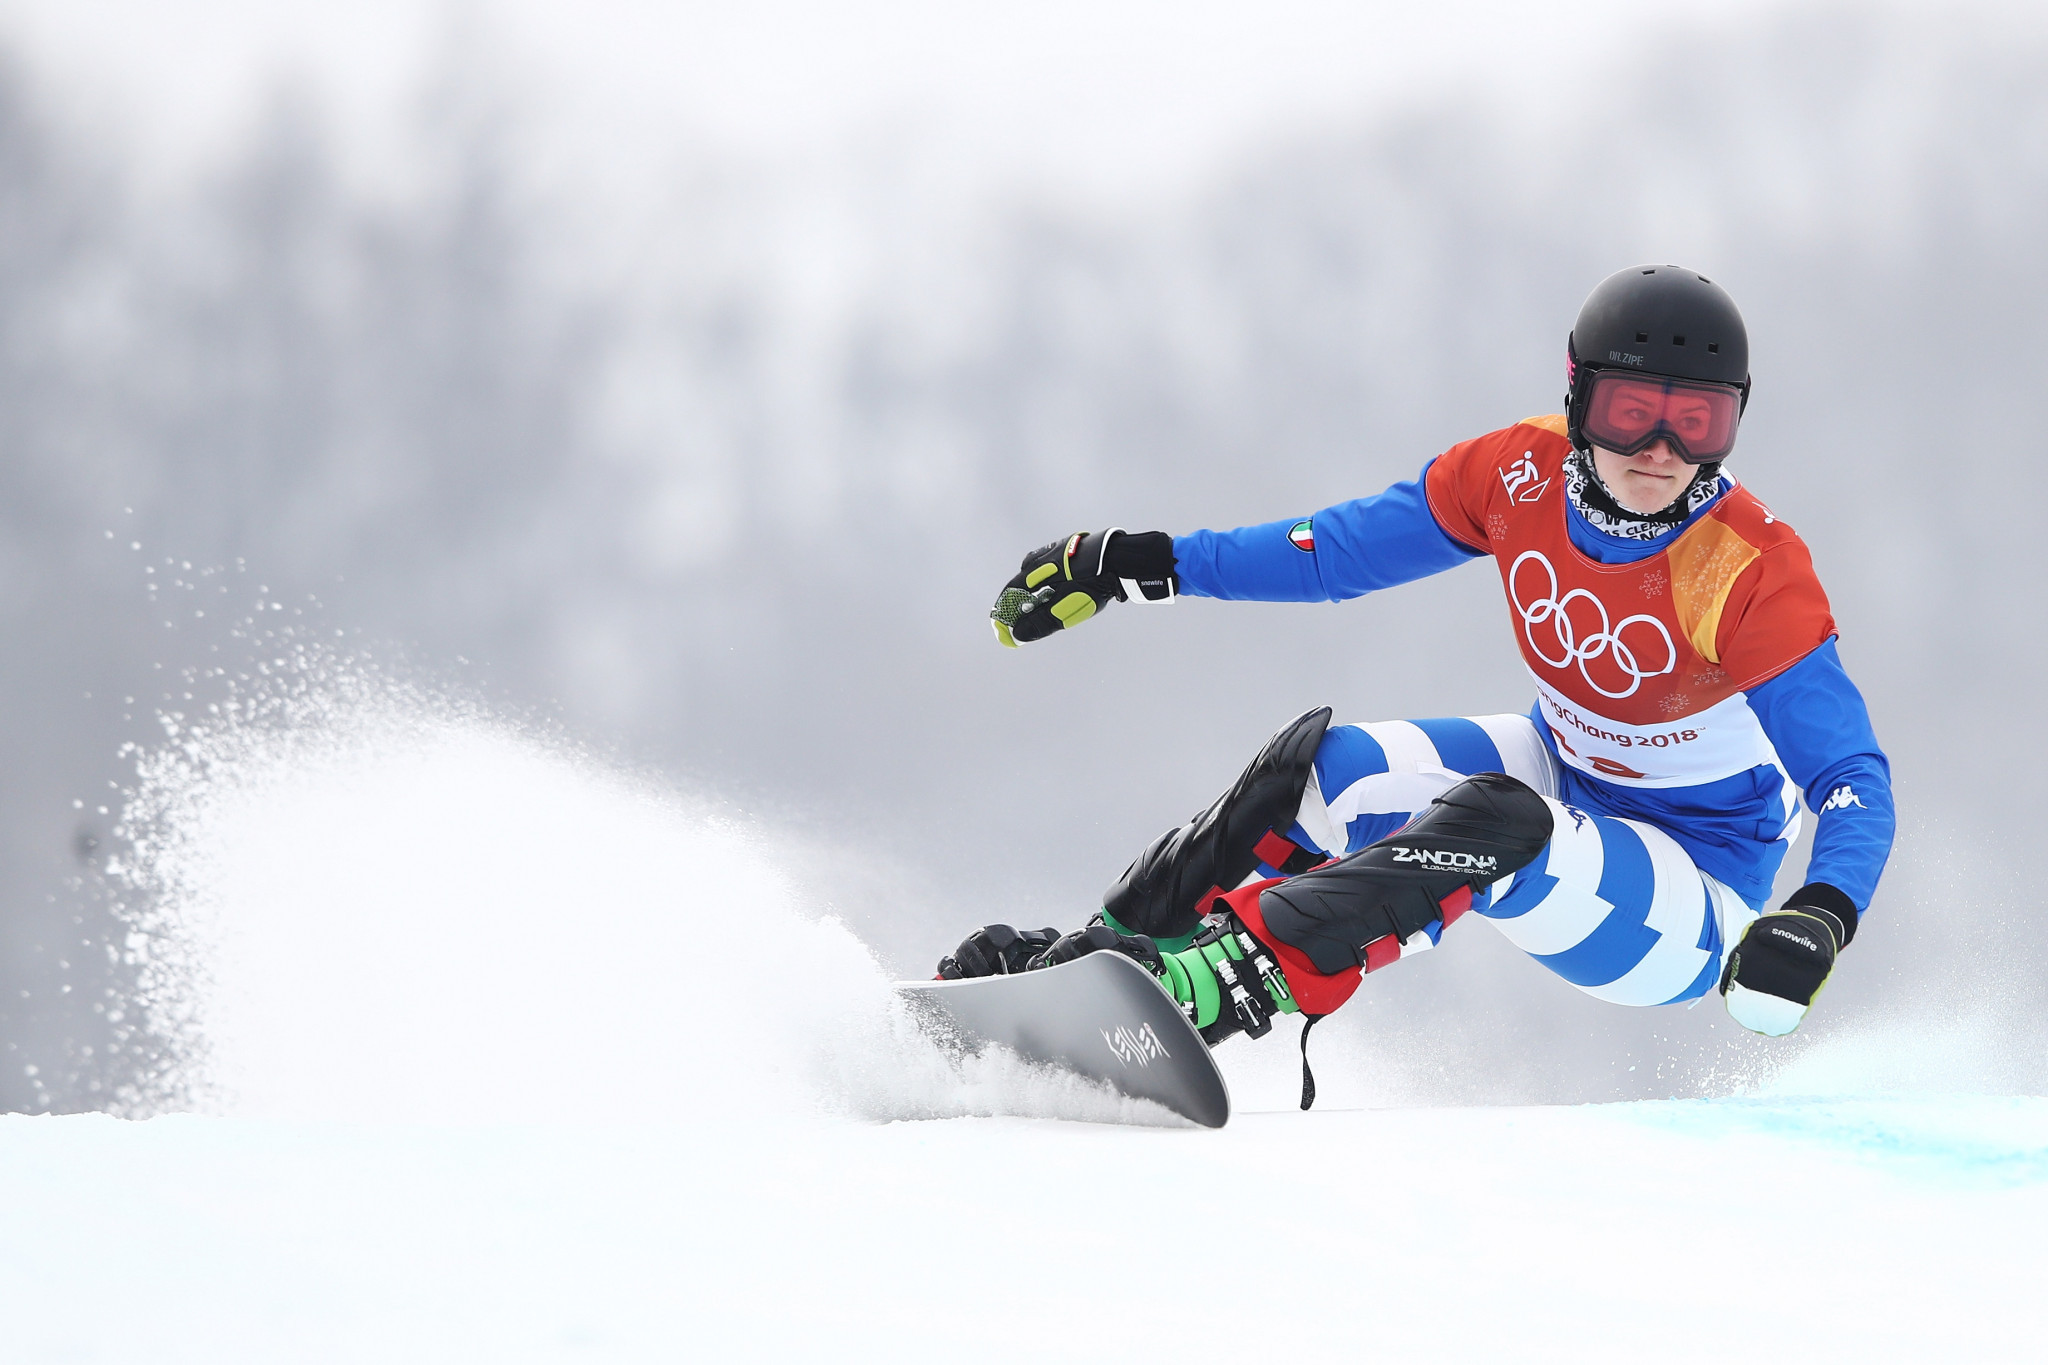 FIS Alpine Snowboard World Cup season set to start in Bannoye 